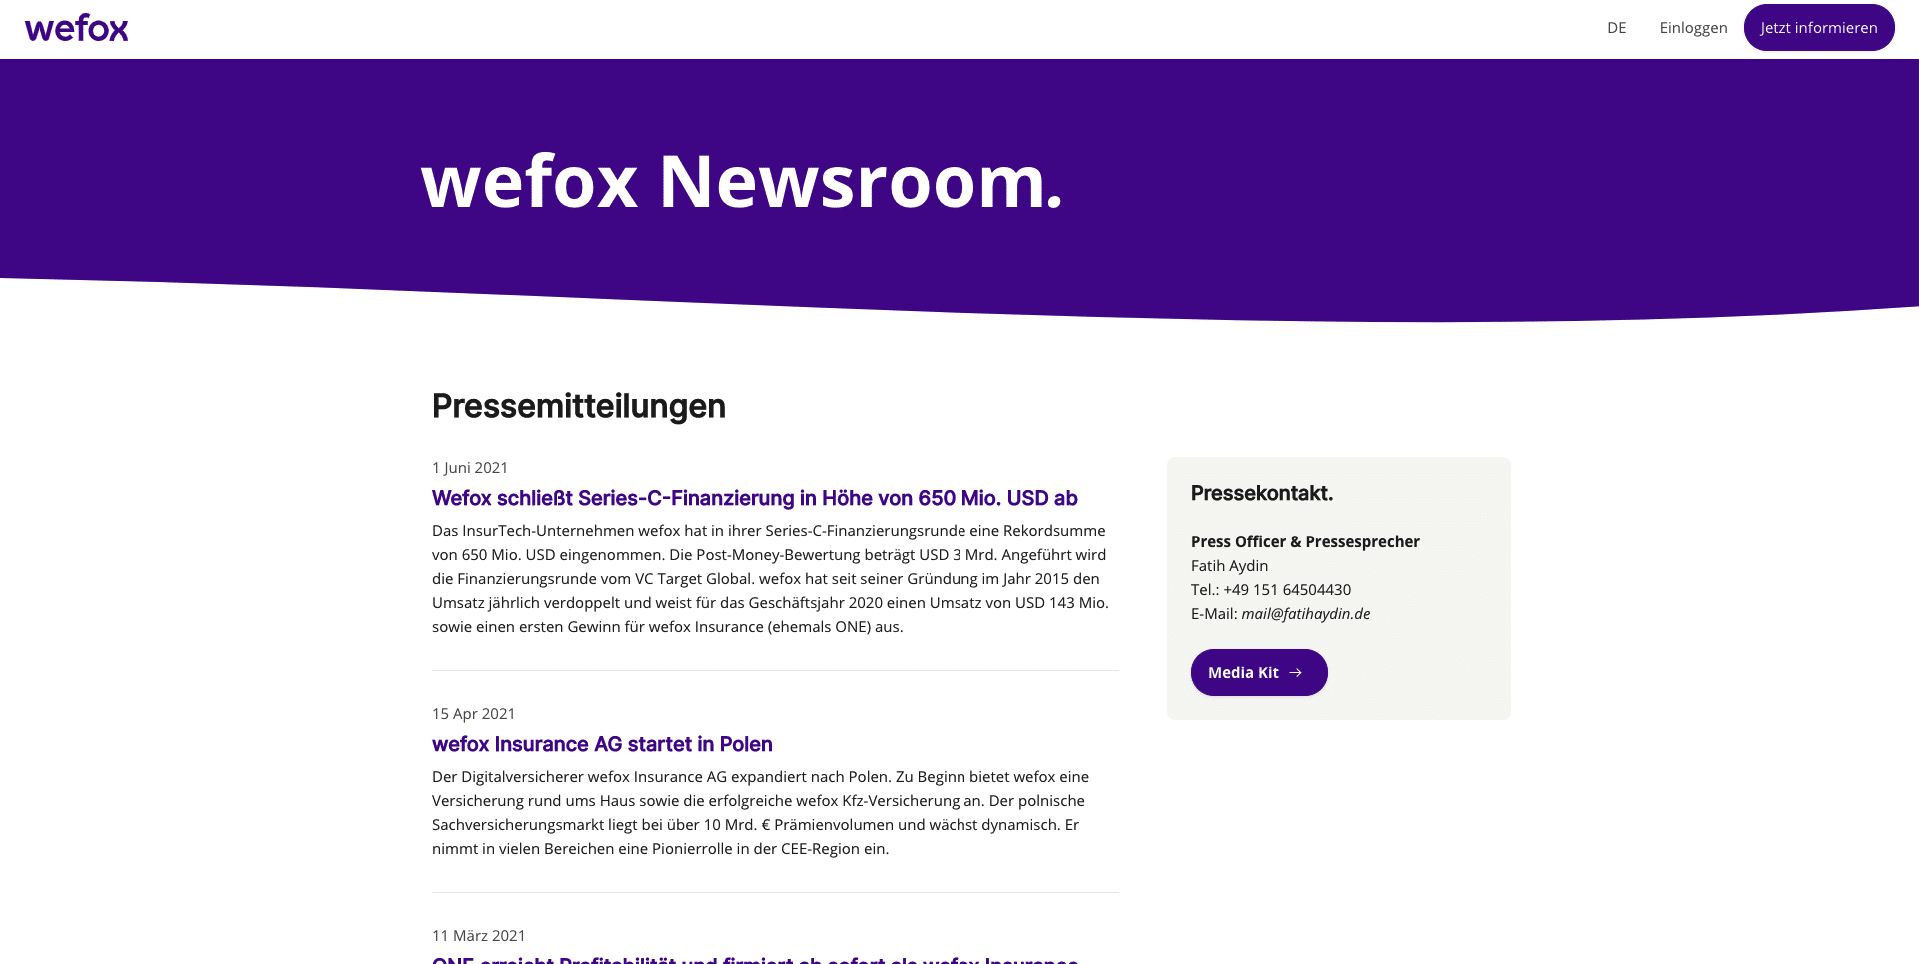 Wefox news